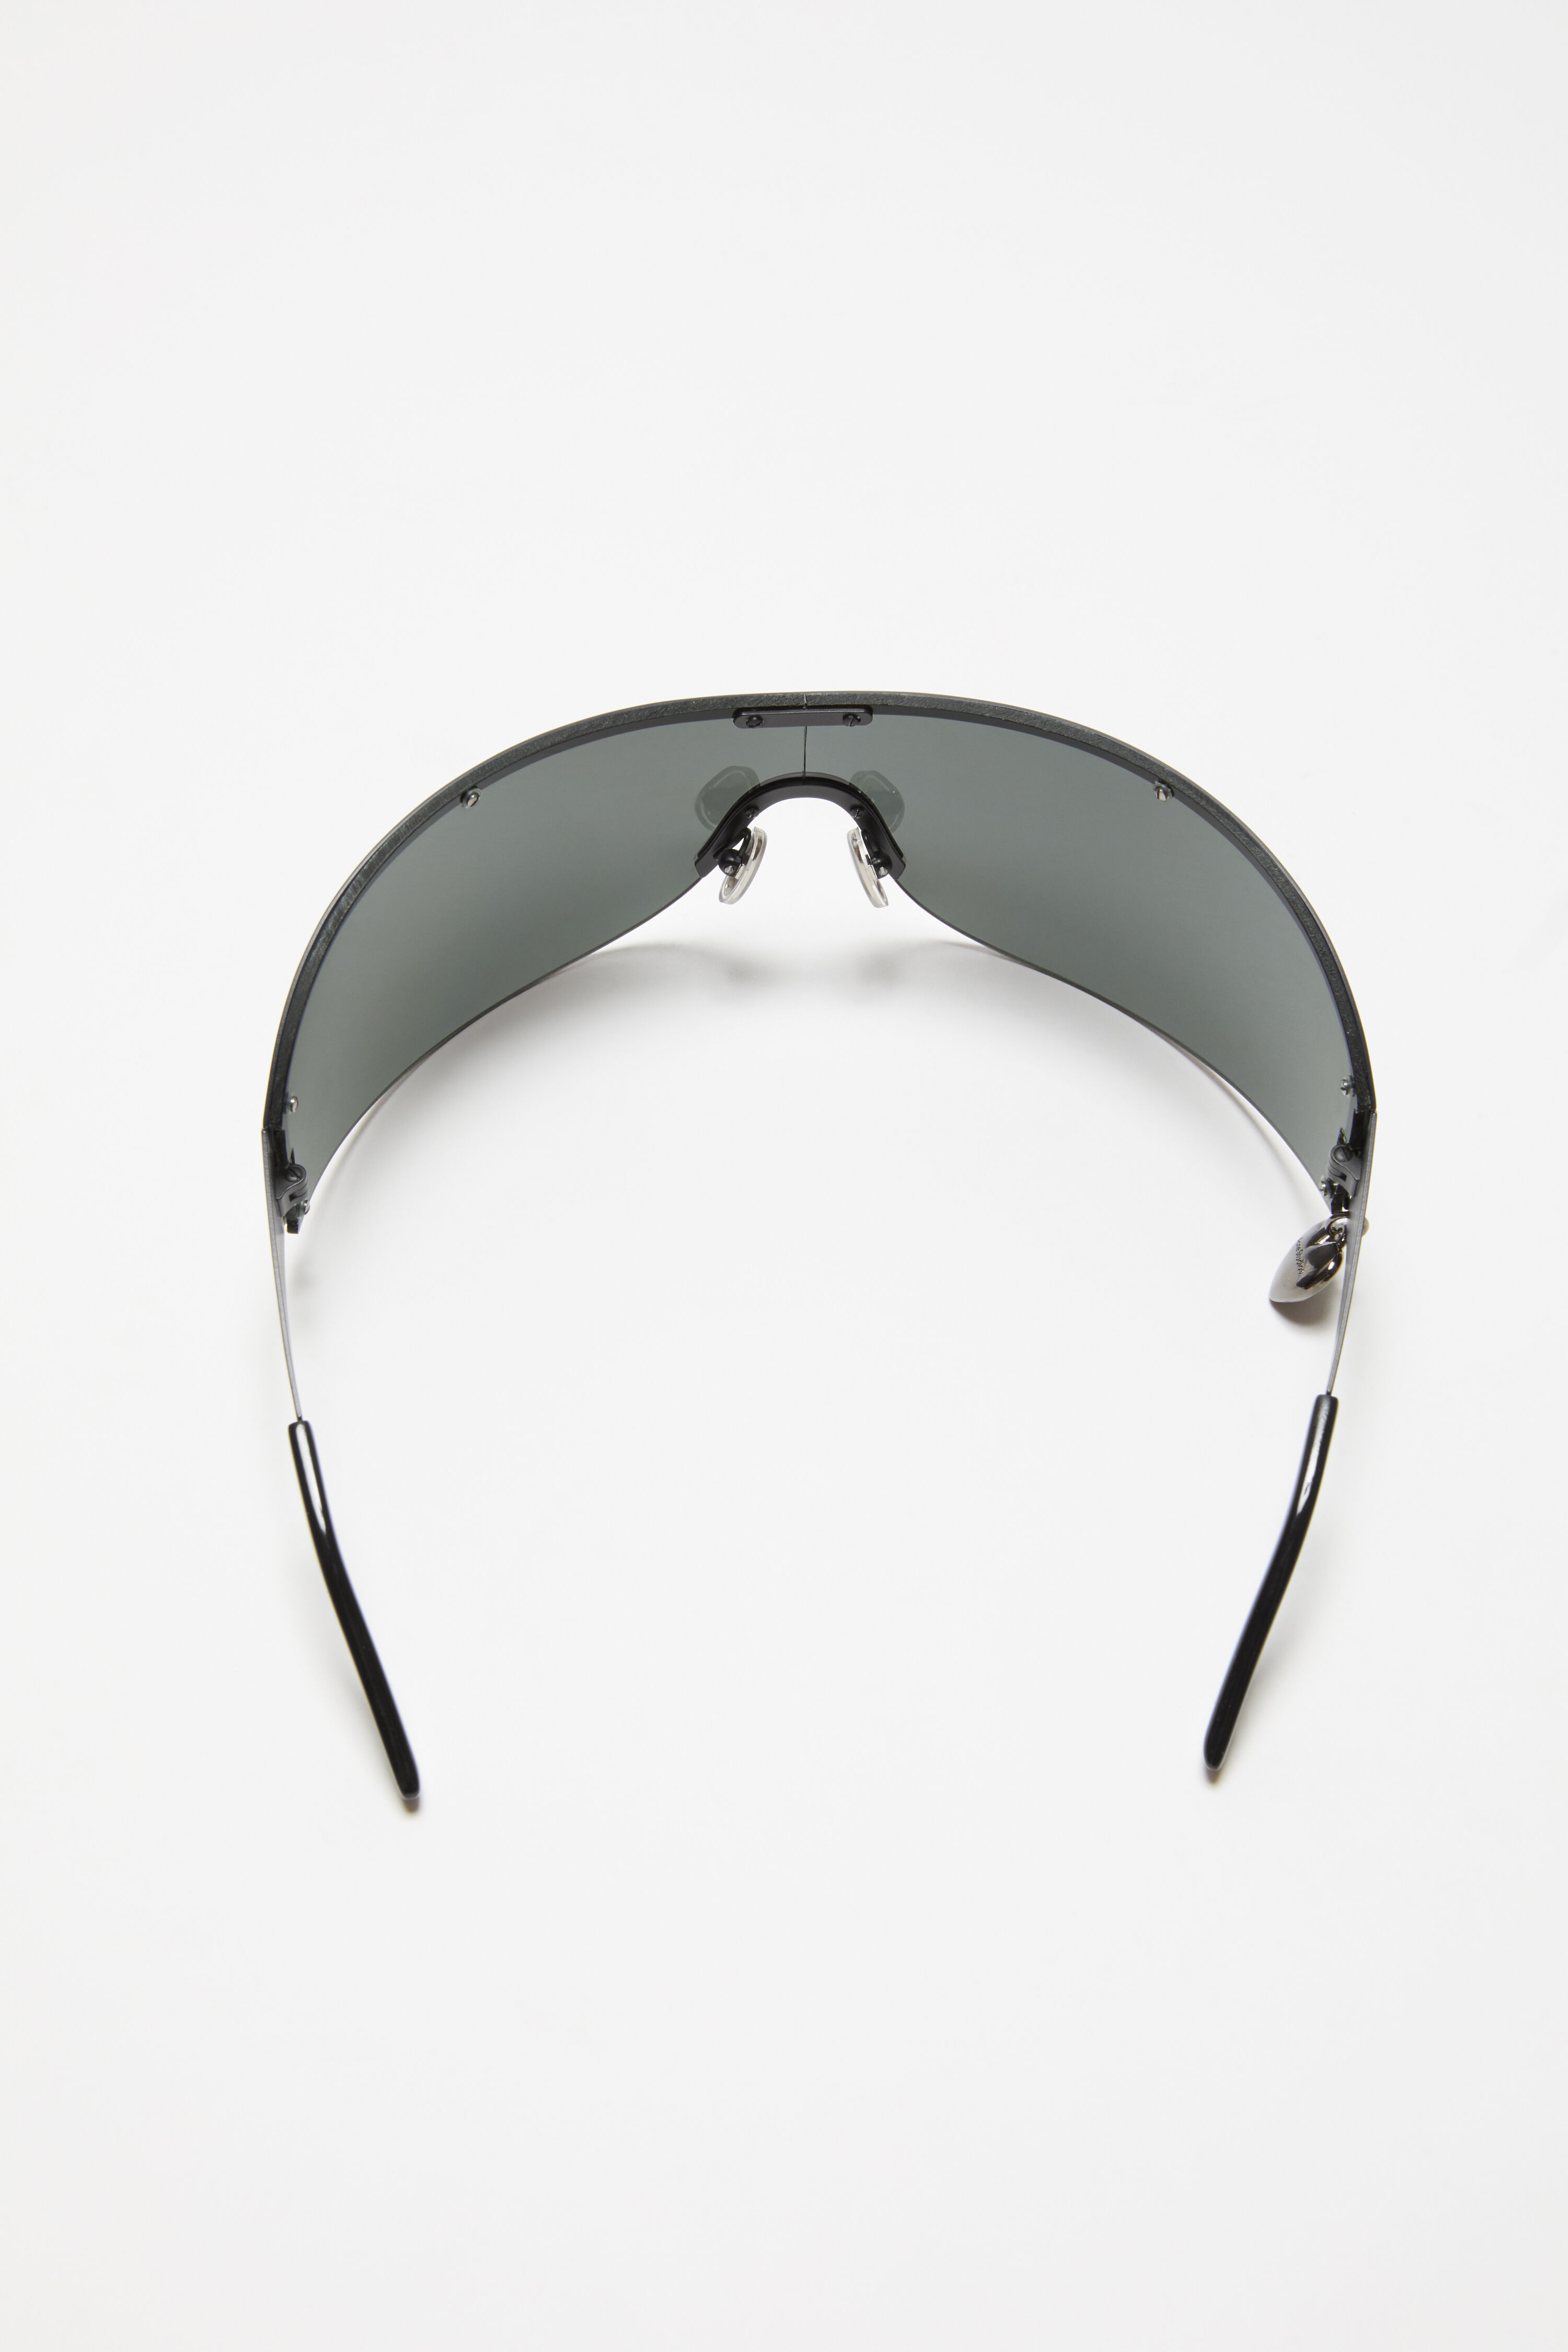 Acne Studios - Metal frame sunglasses - Black/black